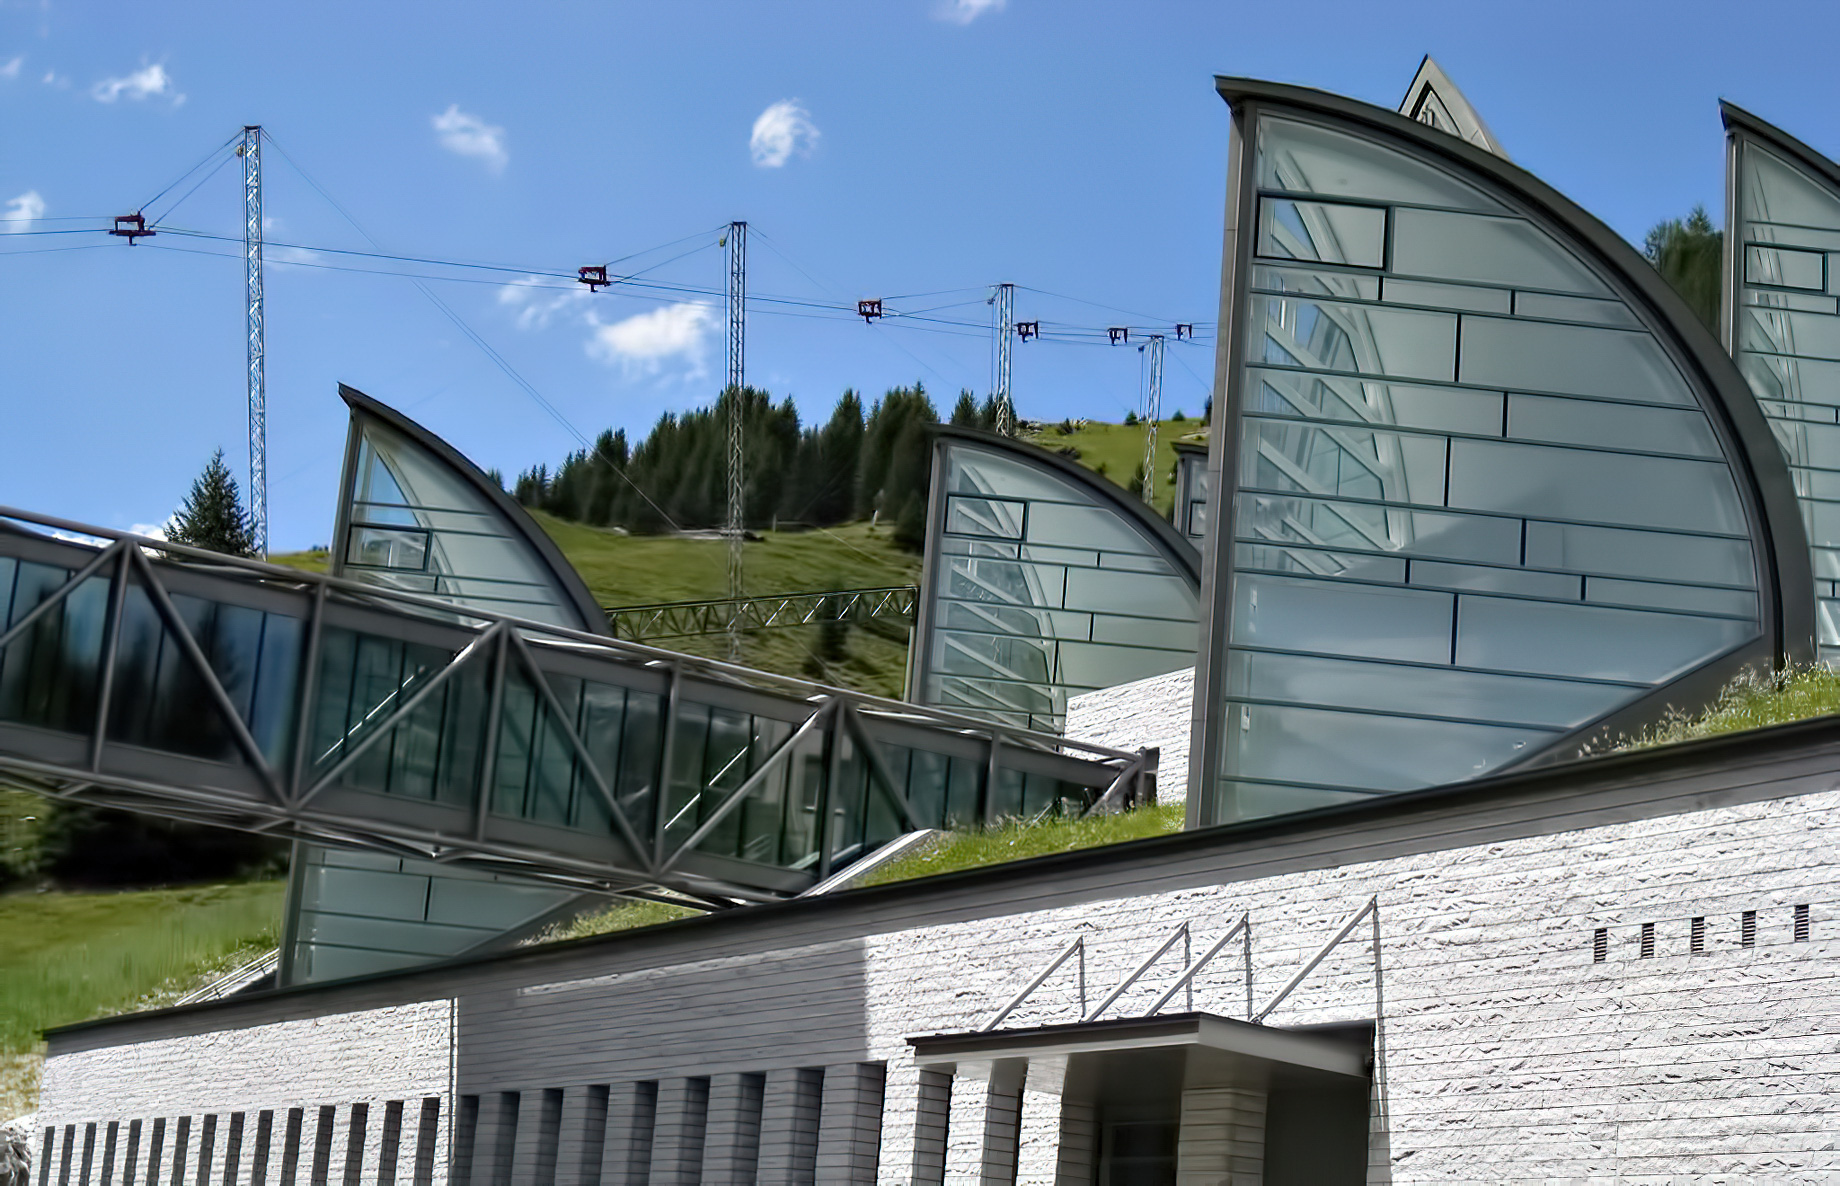 Tschuggen Grand Hotel – Arosa, Switzerland – Glass Sails